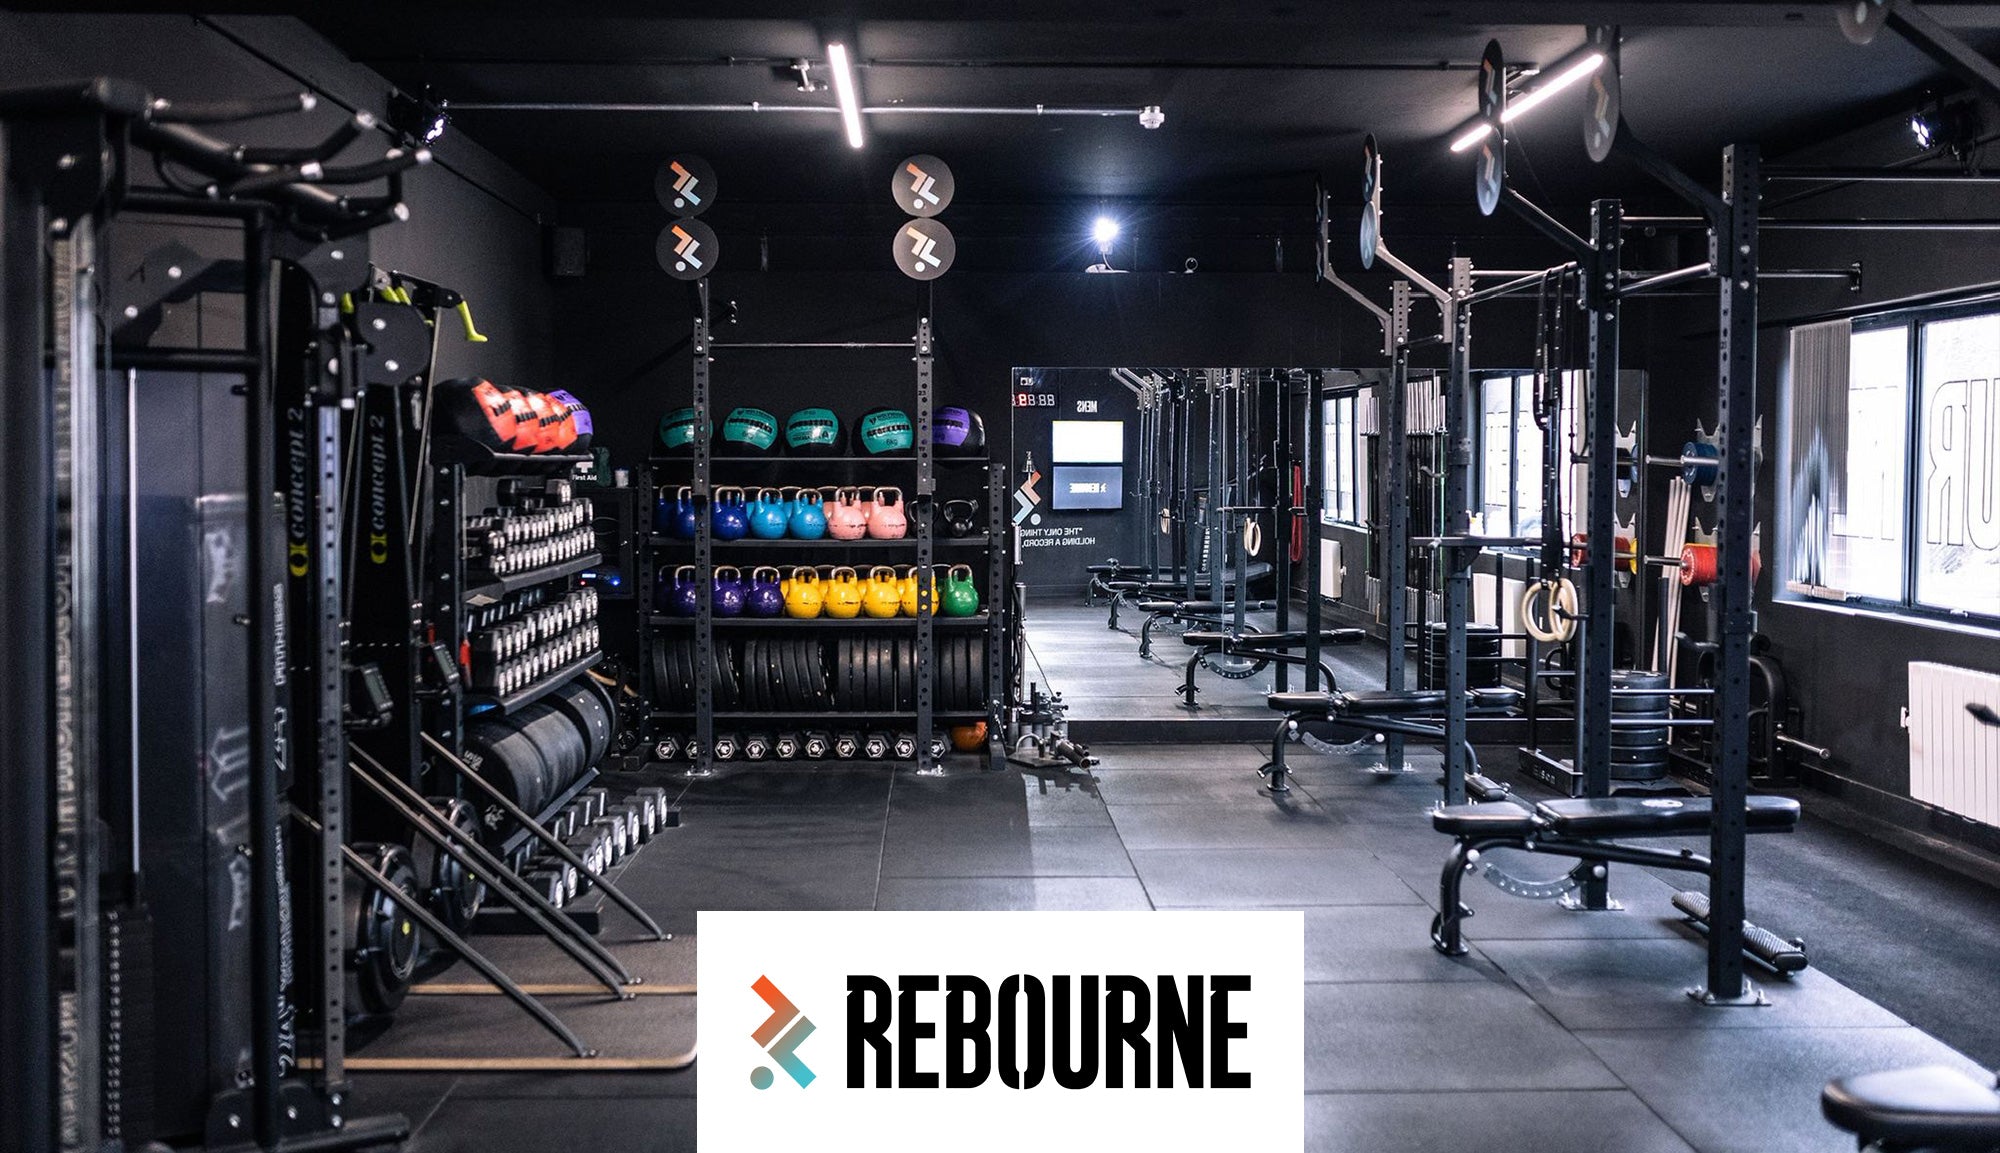 Rebourne Health & Fitness